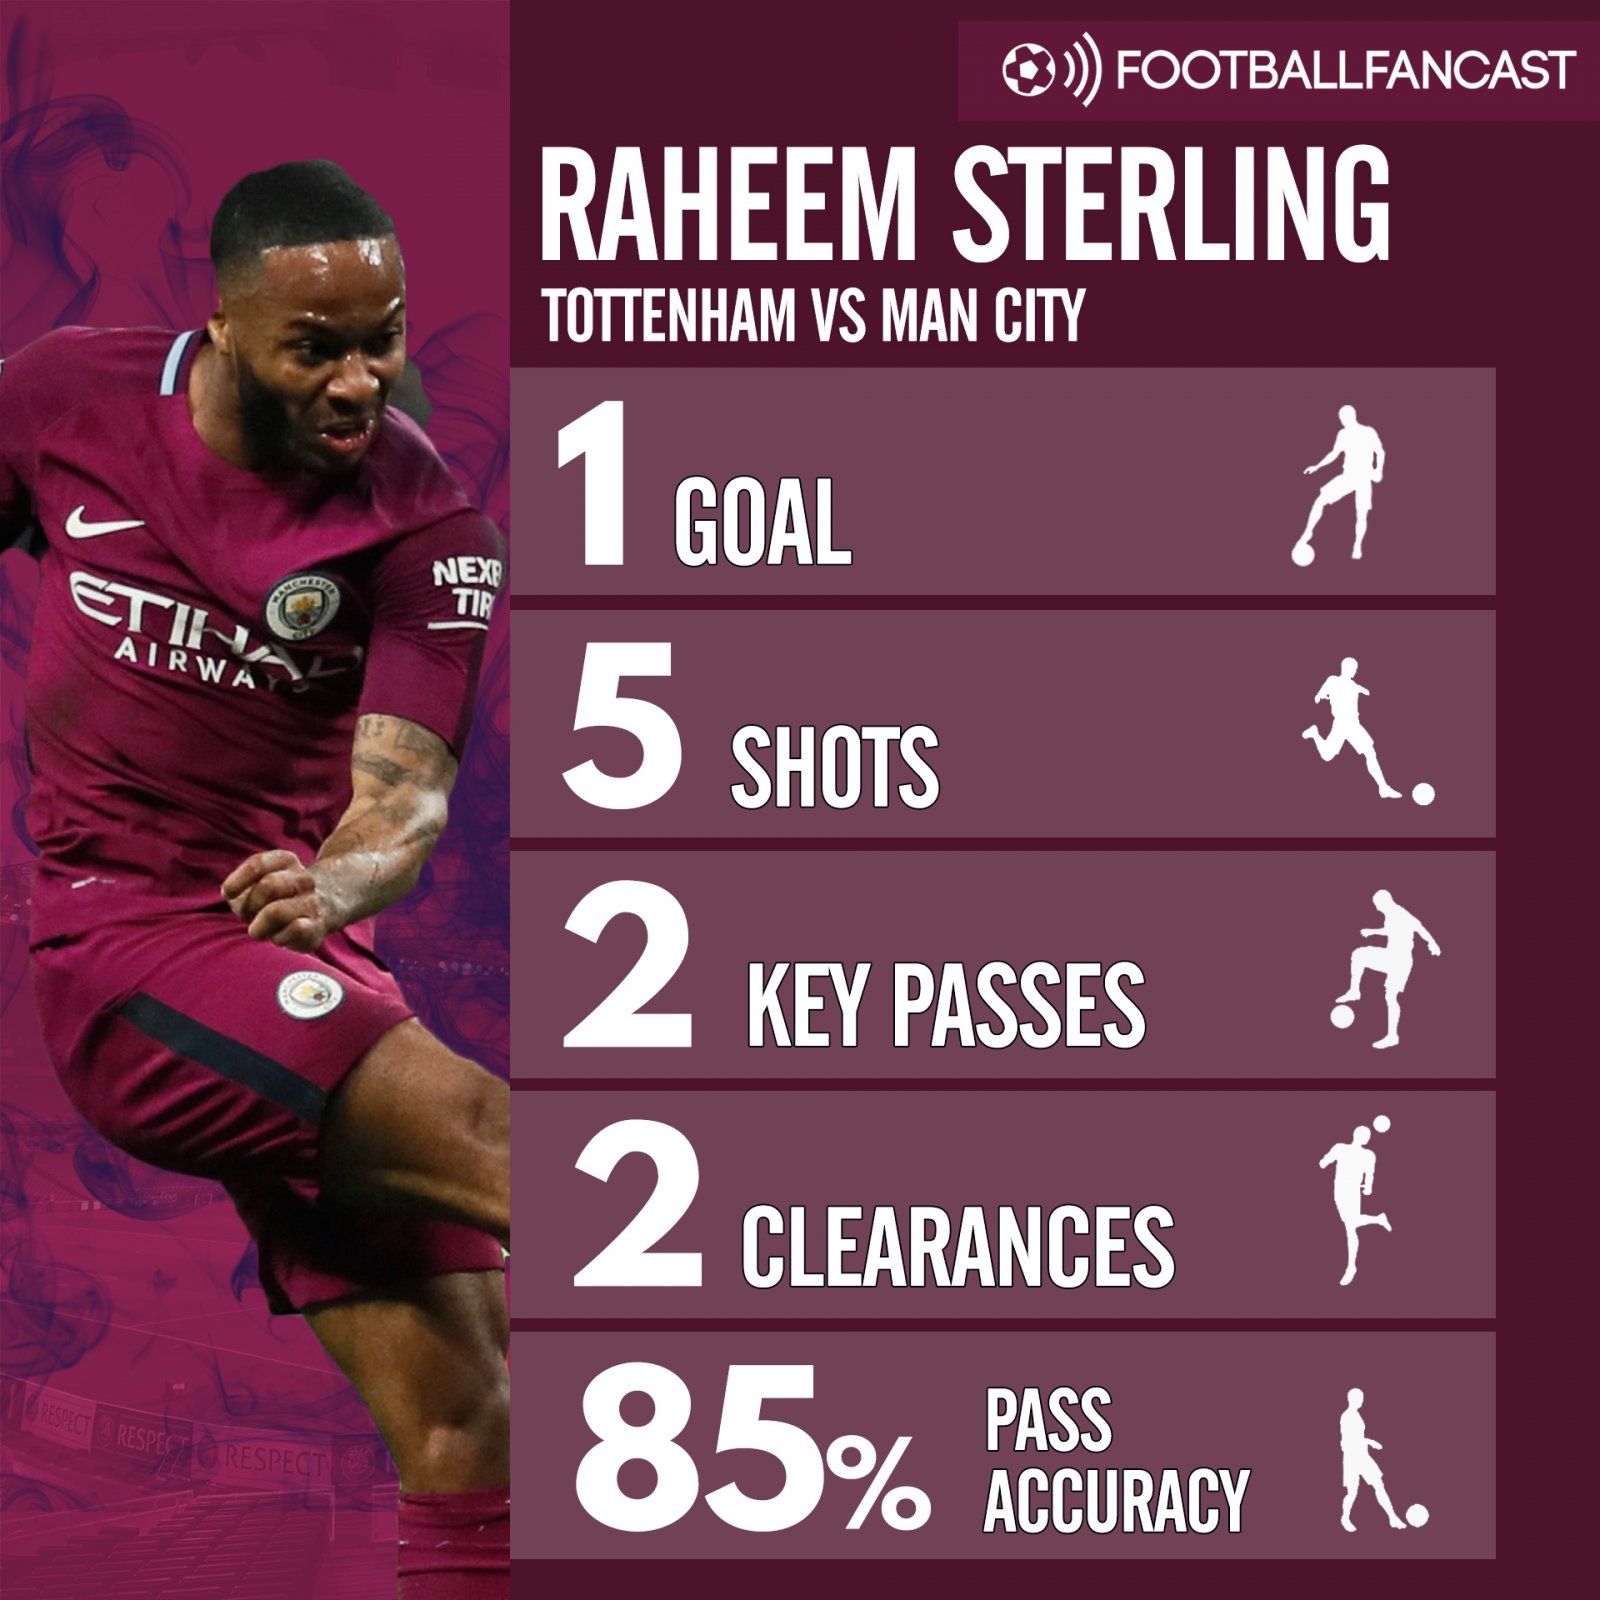 Raheem Sterling's stats from Man City's 3-1 win over Tottenham